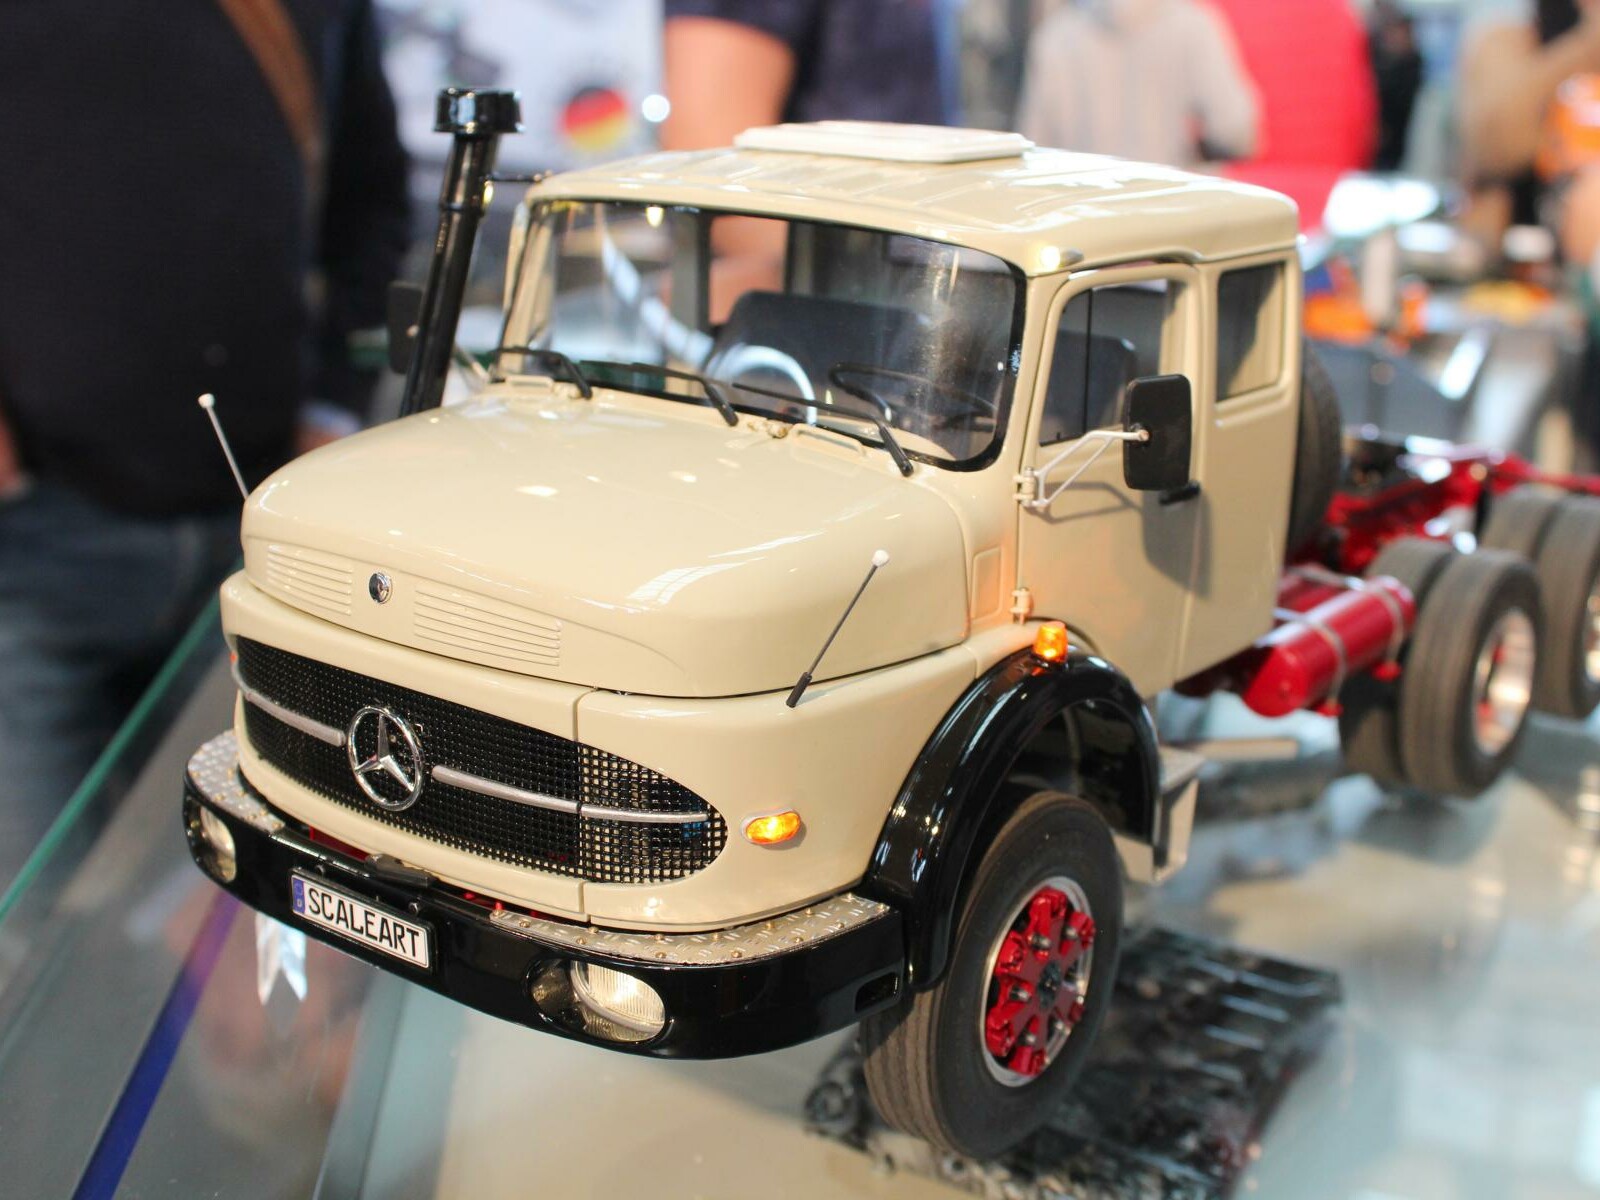 Faszination Modellbau Internationale Leitmesse für Modellbahnen und Modellbau Truckmodellbau 2022 6 uai